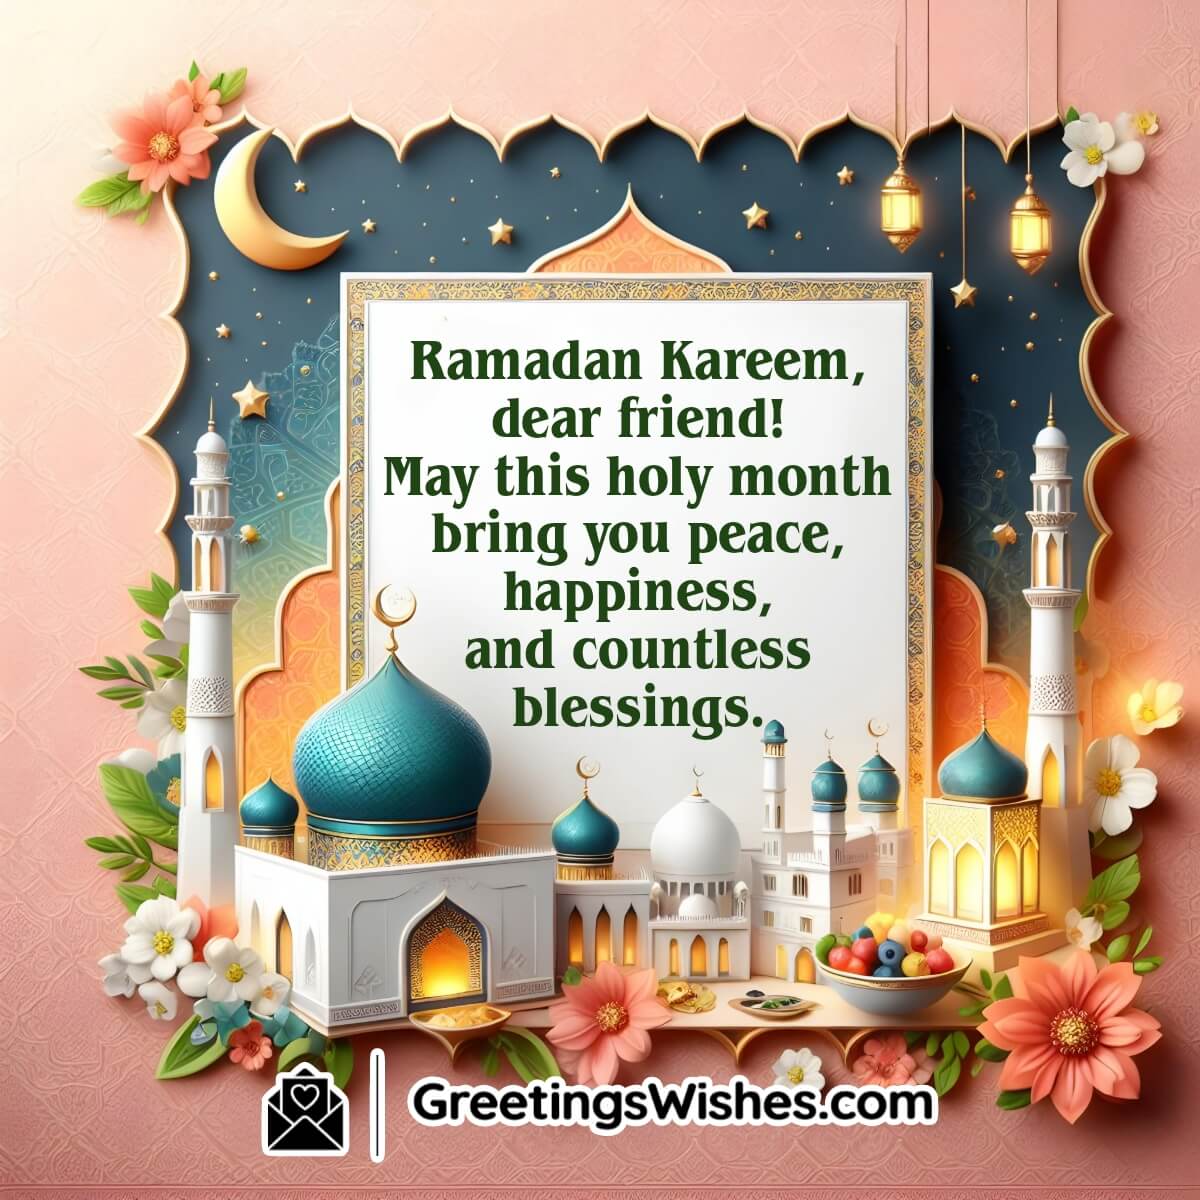 Ramadan Kareem Wishes For Friends